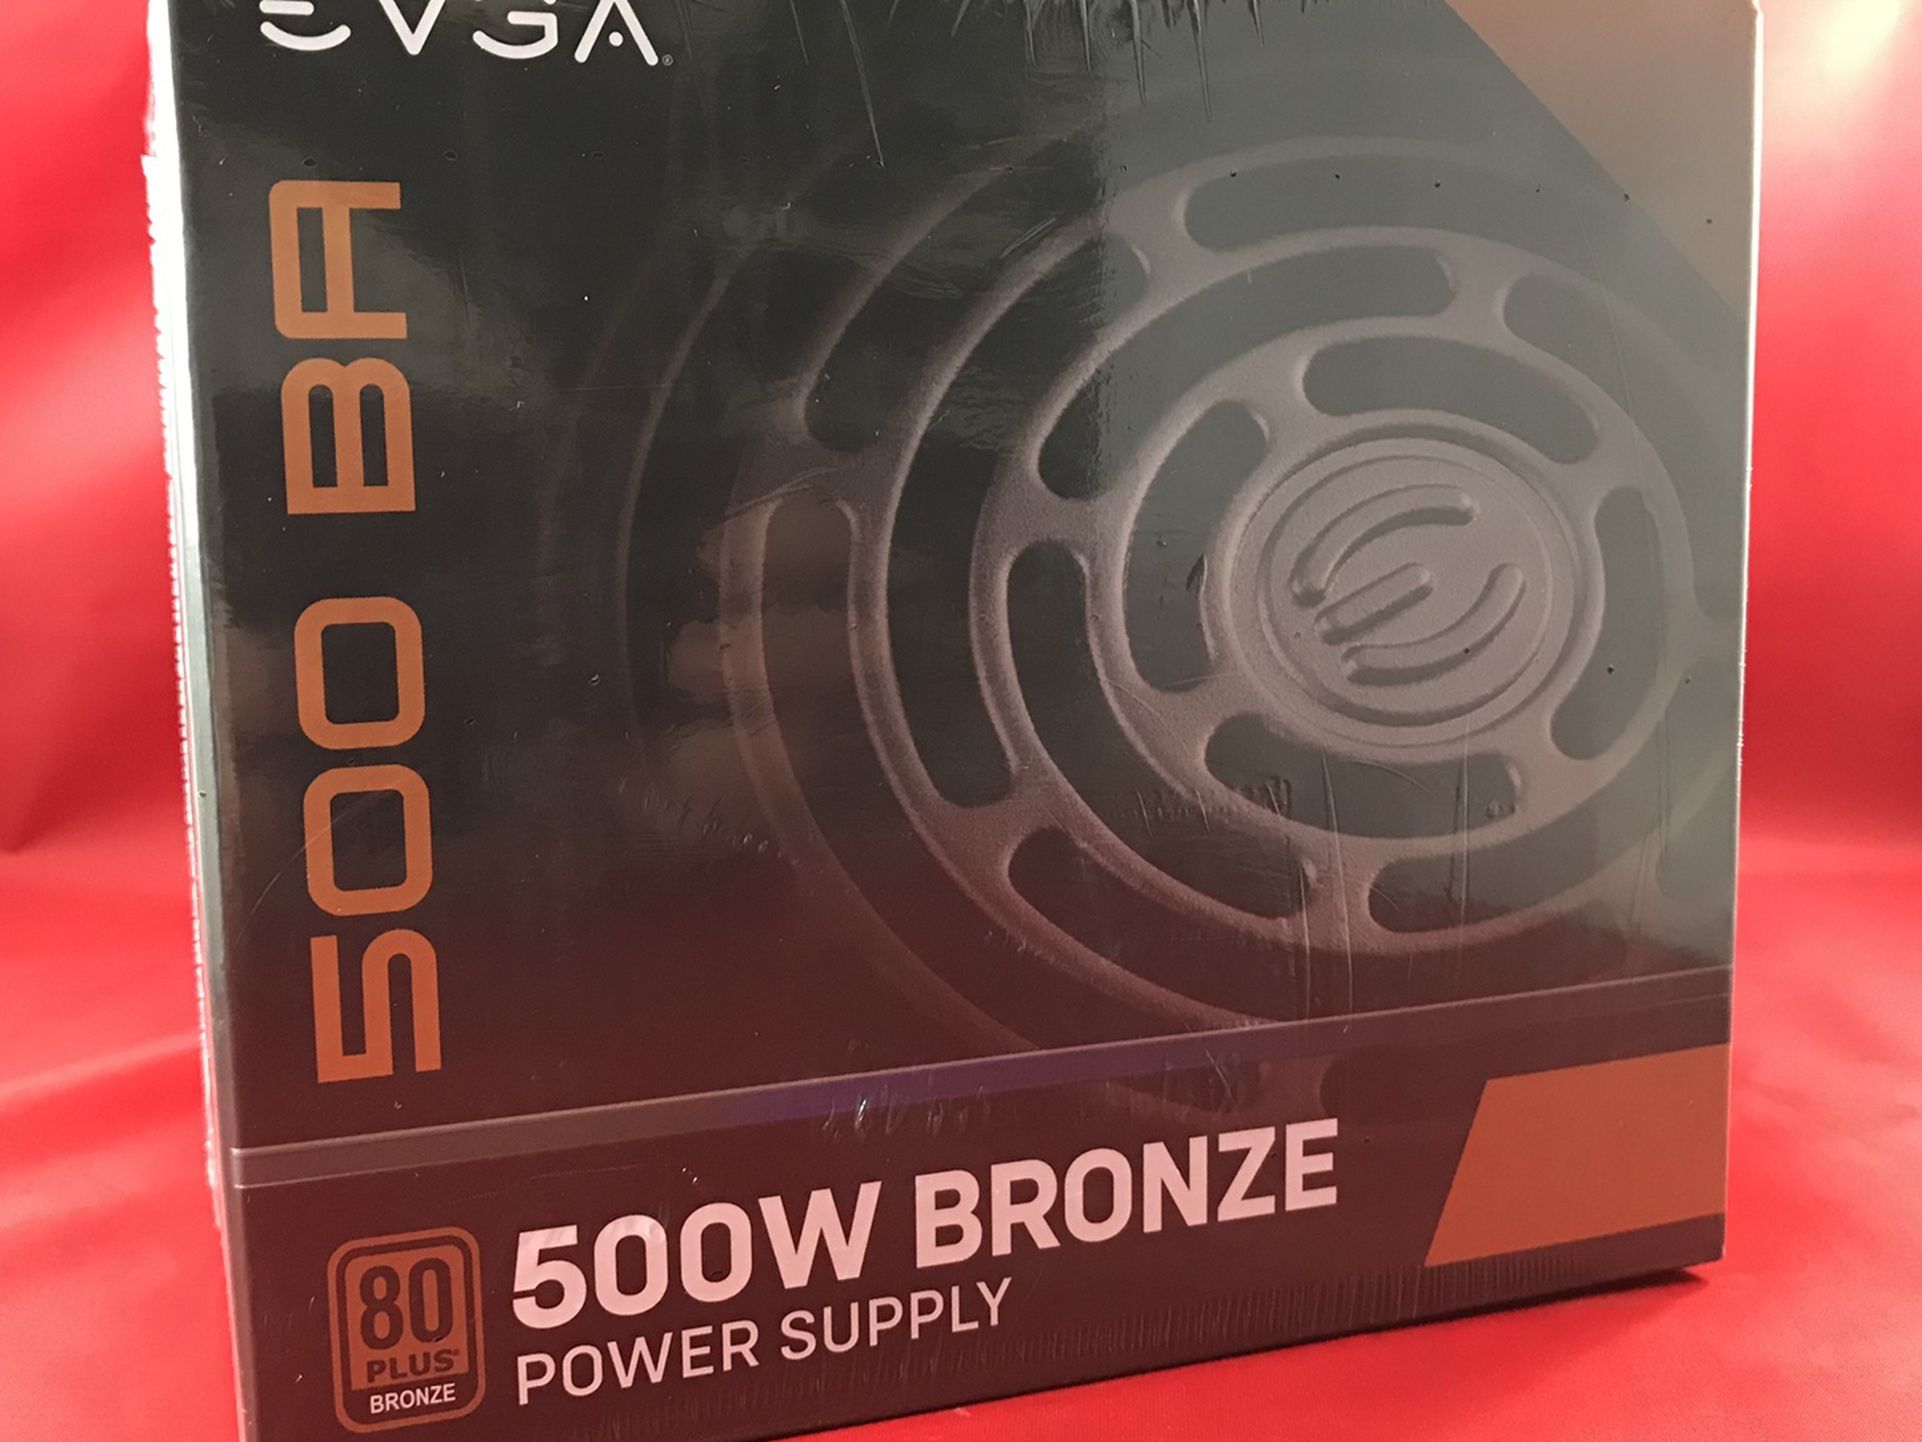 EVGA 500 BR 500w Power Supply 80 Plus Bronze